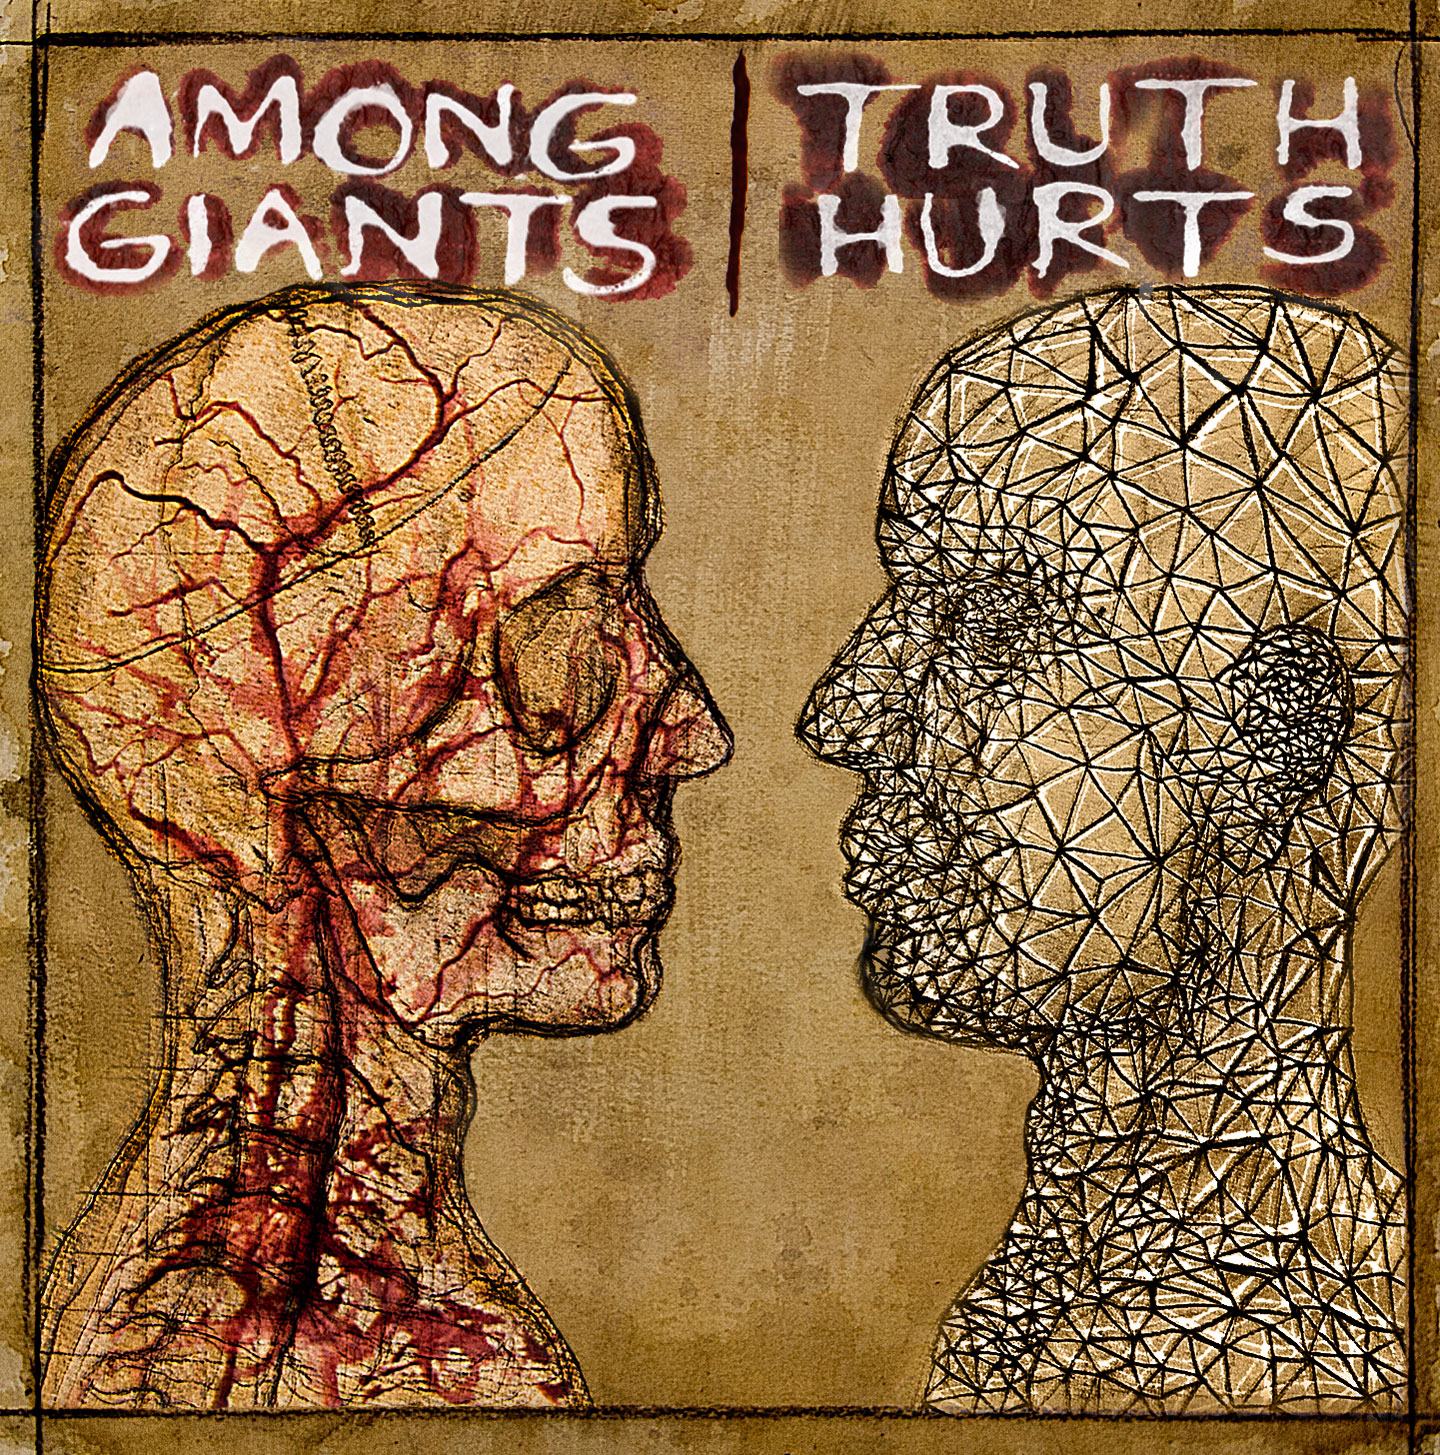 Among Giants - Truth Hurts CD